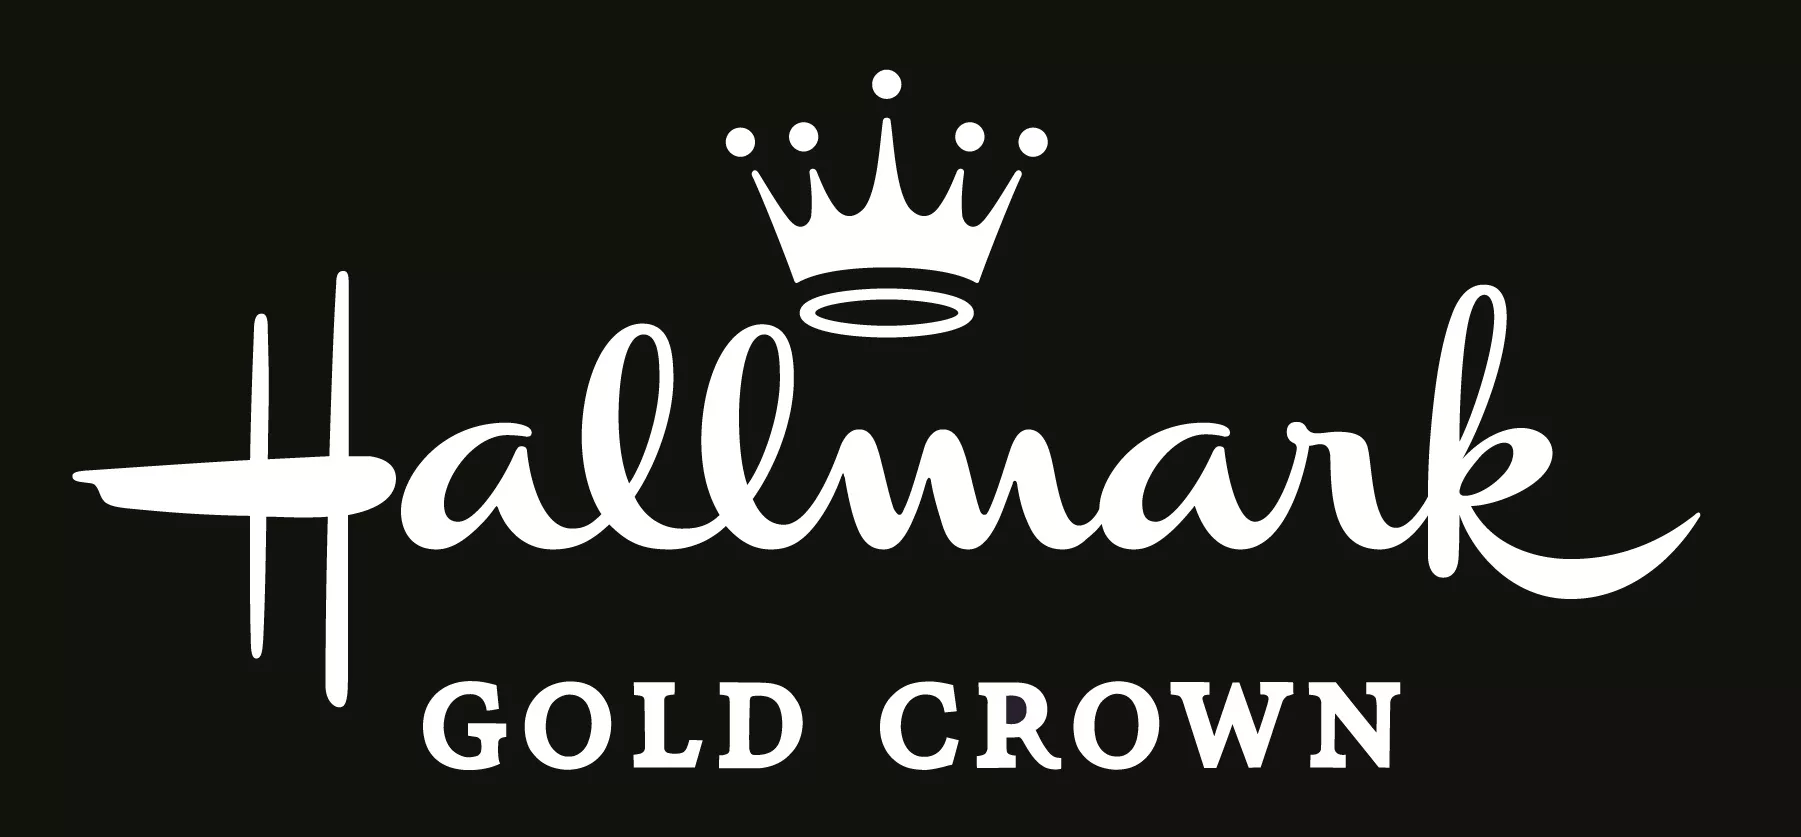 GoldCrownwbox_logo